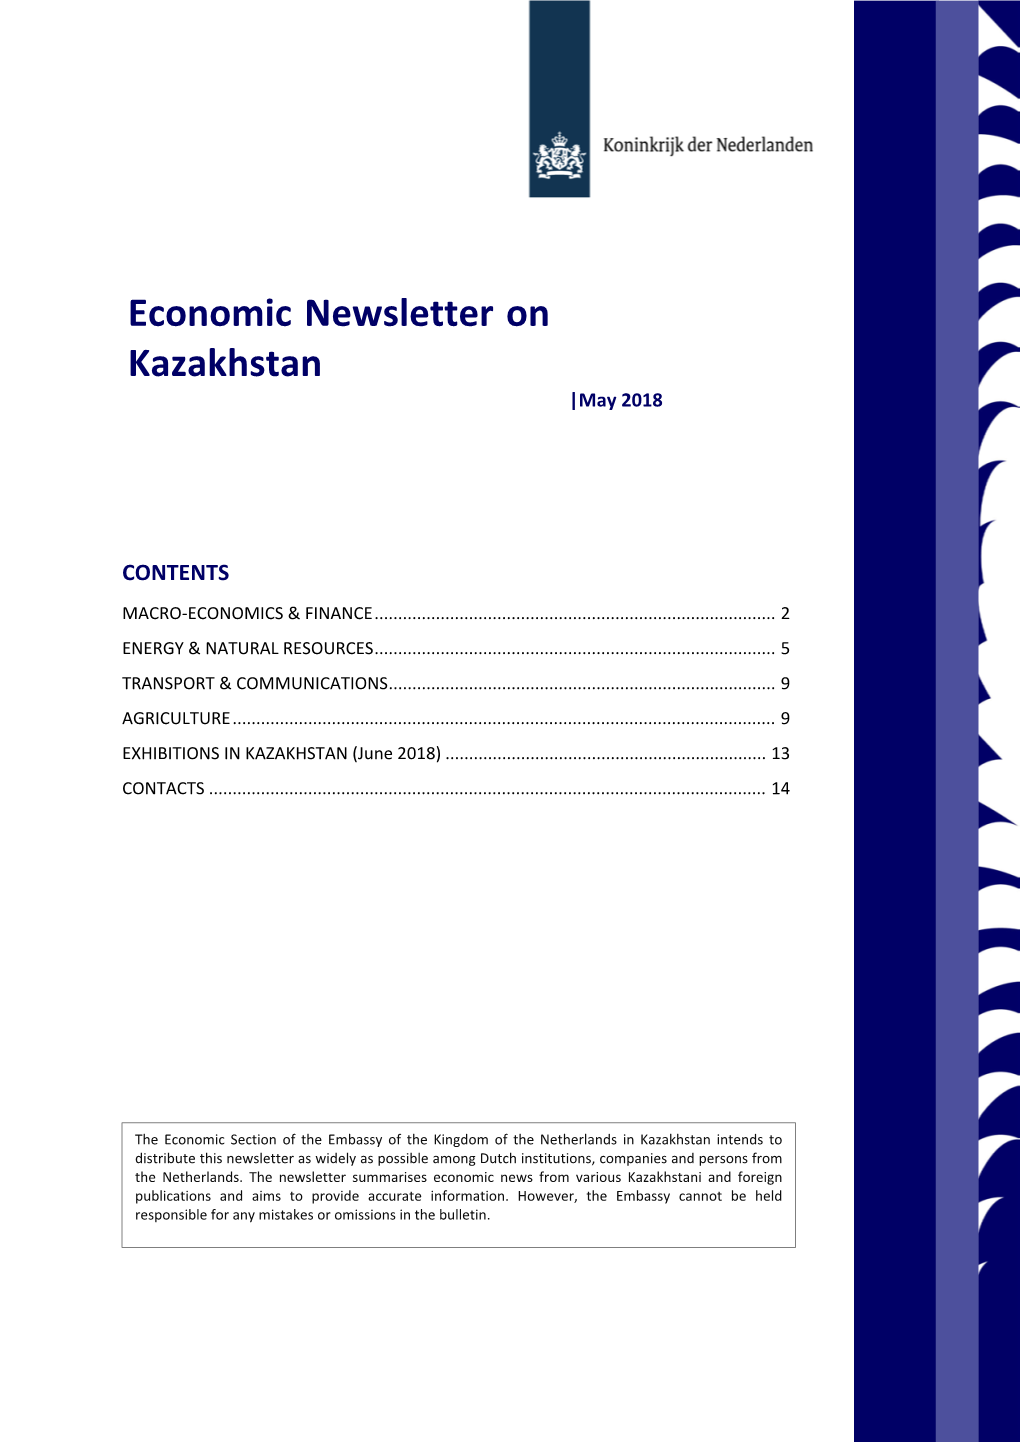 Economic Newsletter on Kazakhstan |May 2018